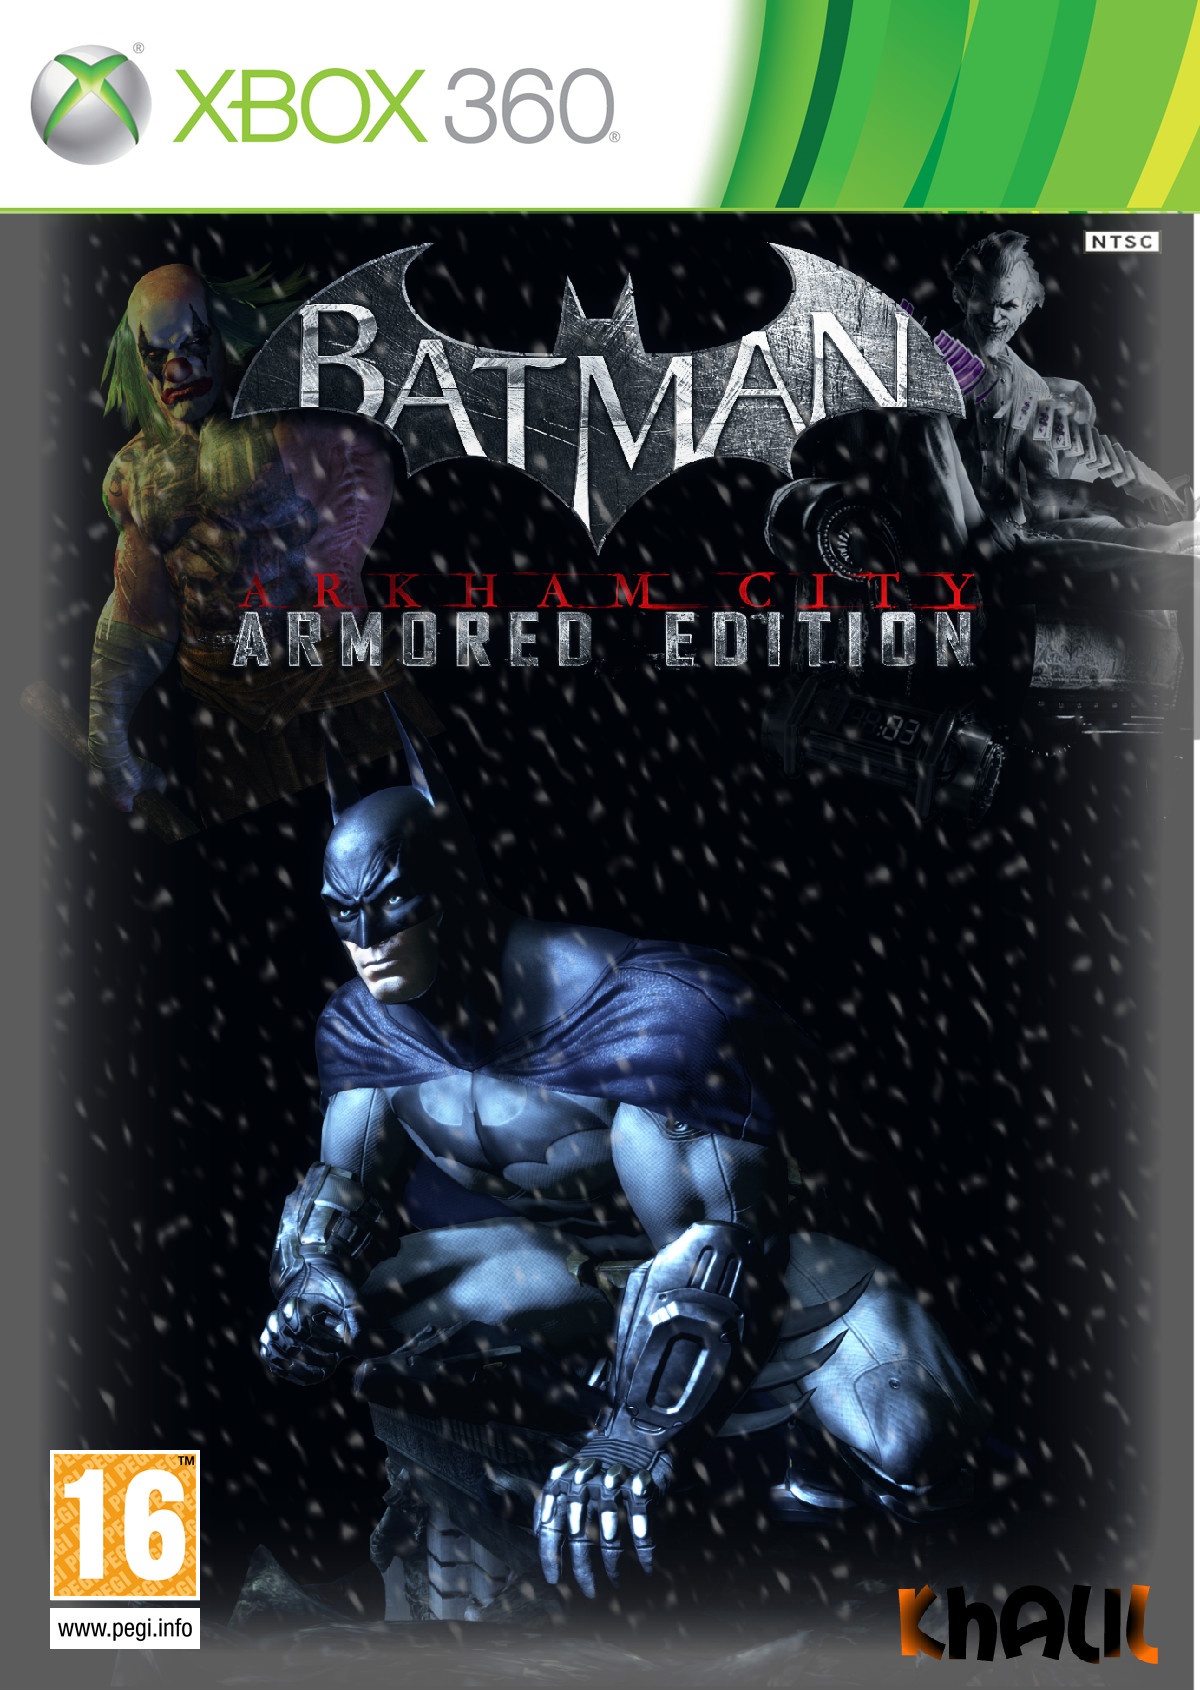 Batman arkhan city Armored edition box cover